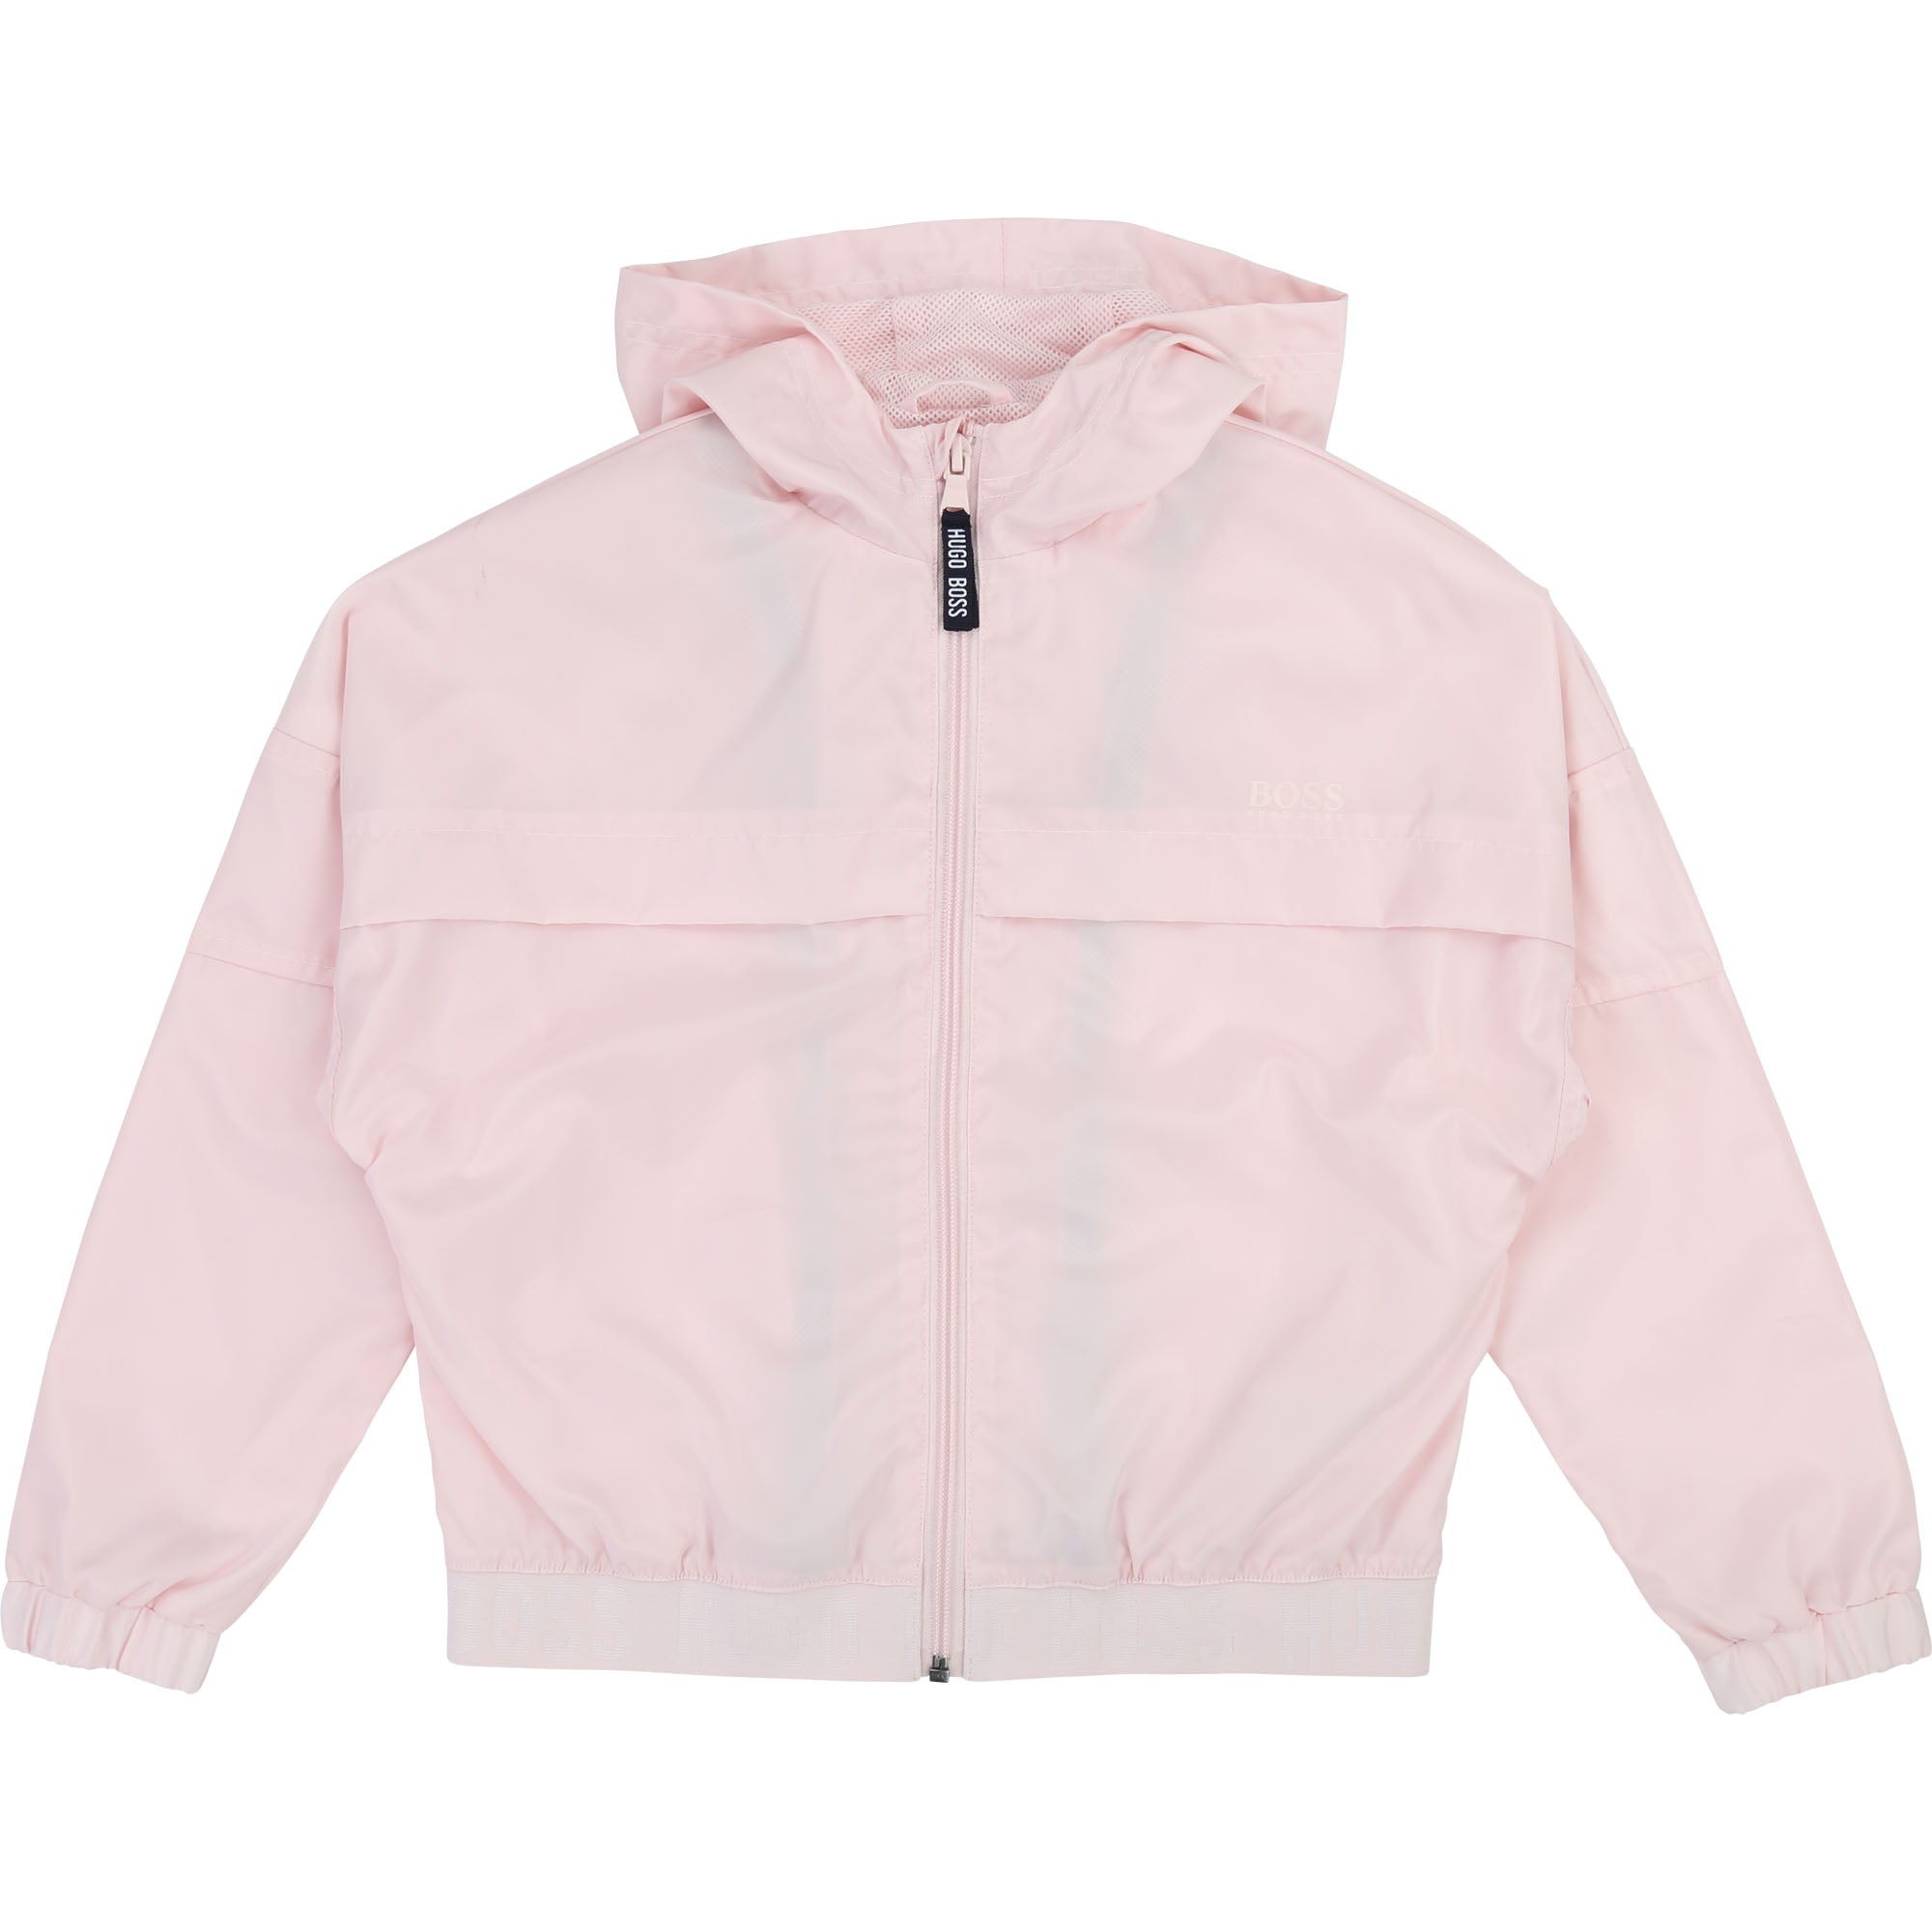 Girls Pale Pink Coat